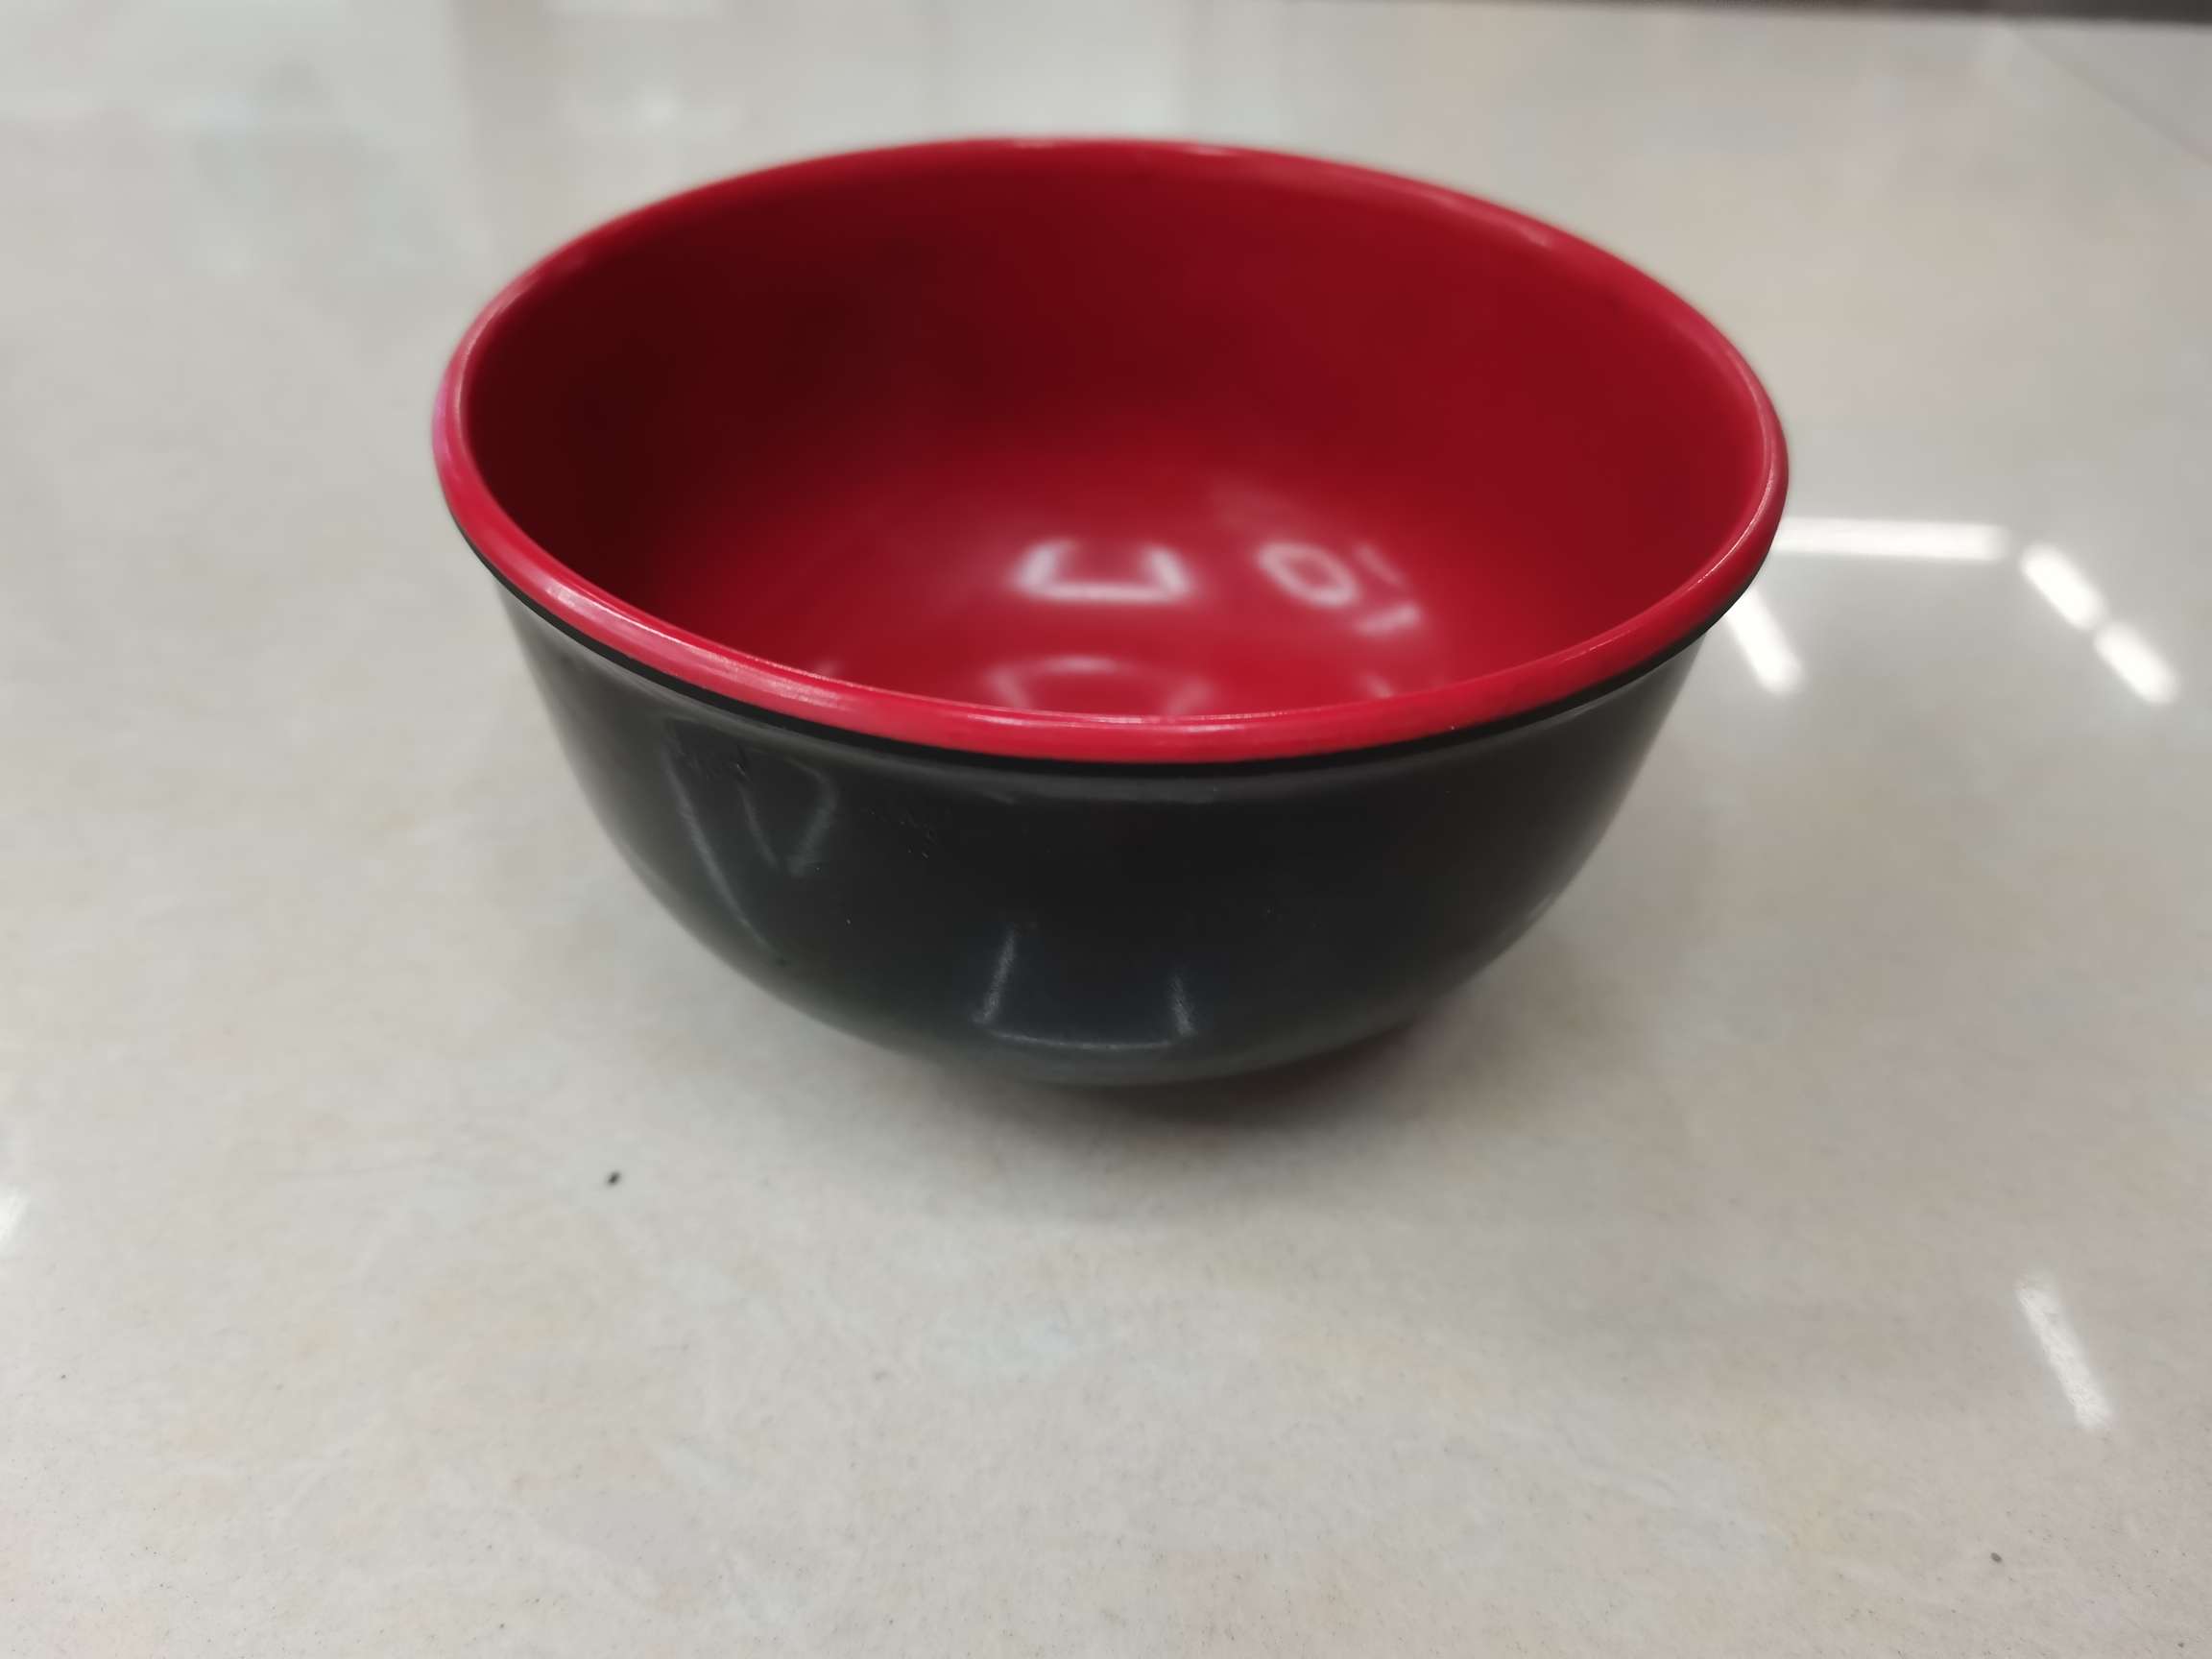 Imitation Porcelain Melamine Tableware Plastic Plate and Bowl Rice Noodles Bowl Black Red Bowl Noodle Bowl Breakfast Bowl Soup Bowl 2011 Black Red Two-Tone Bowl